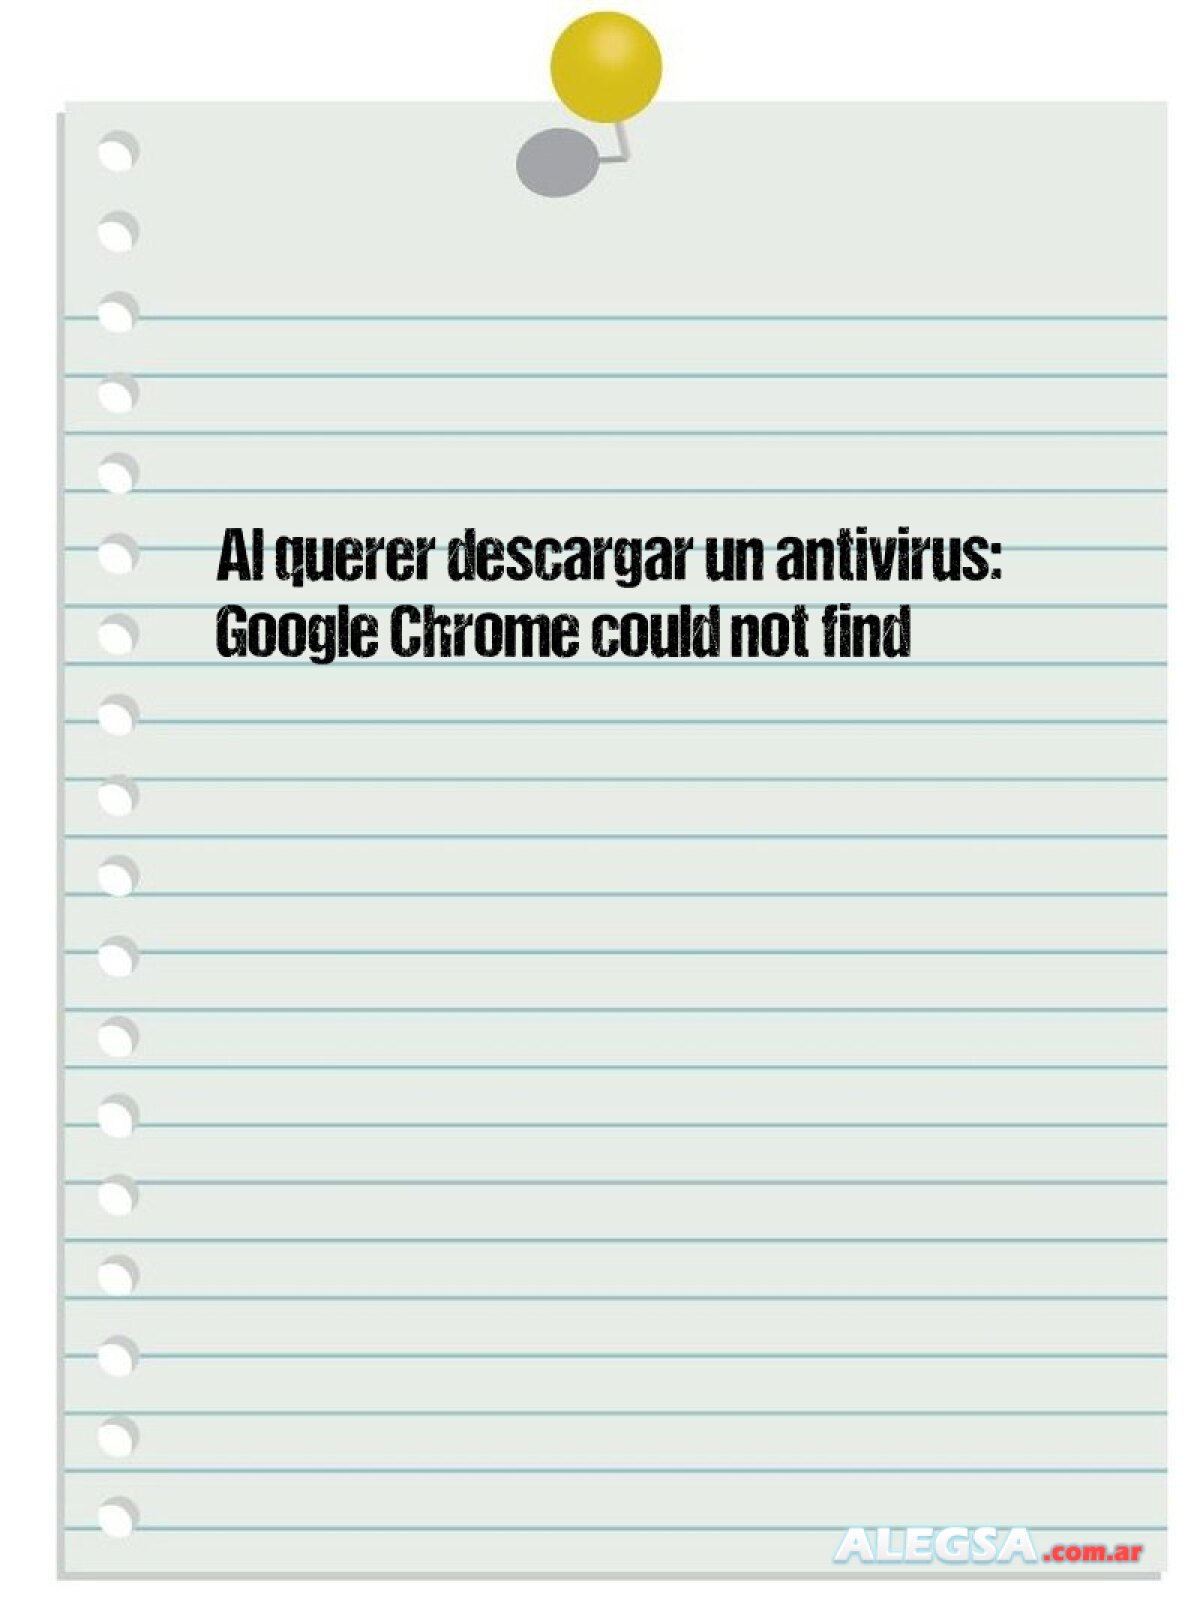 Al querer descargar un antivirus: Google Chrome could not find